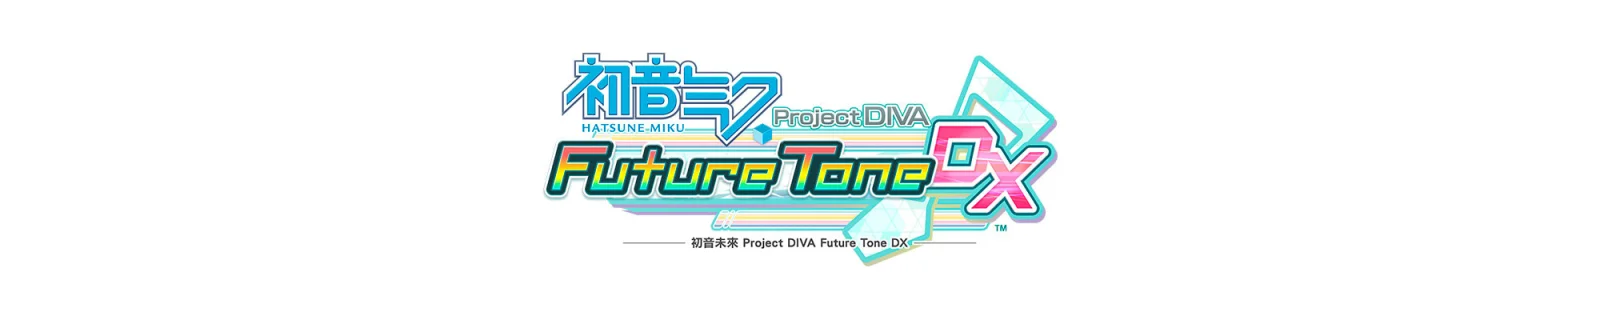 《初音未来 Project DIVA Future Tone DX》游戏资讯新公开 